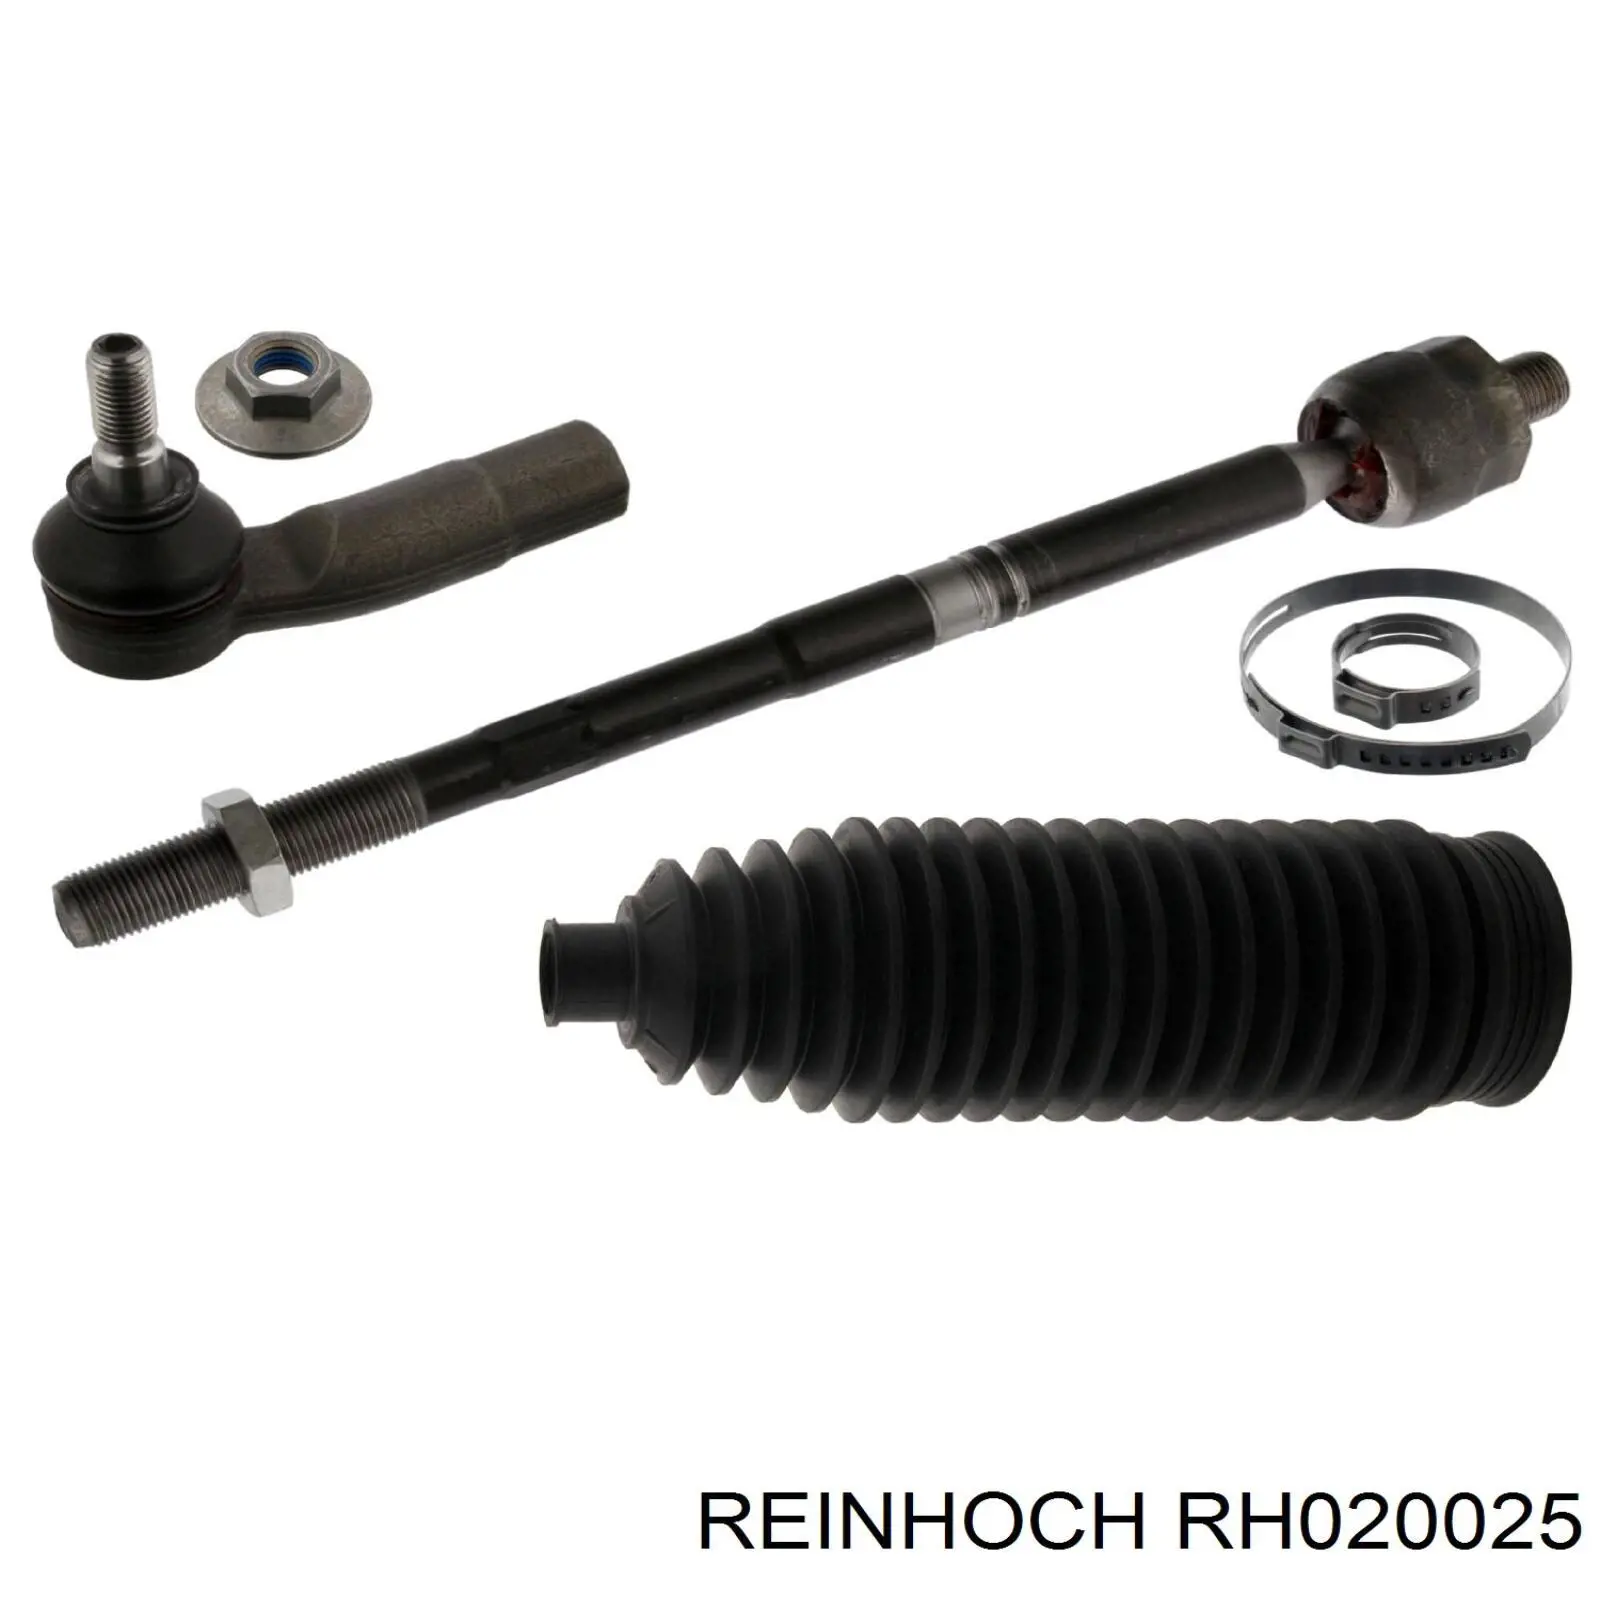 RH020025 Reinhoch barra de acoplamiento